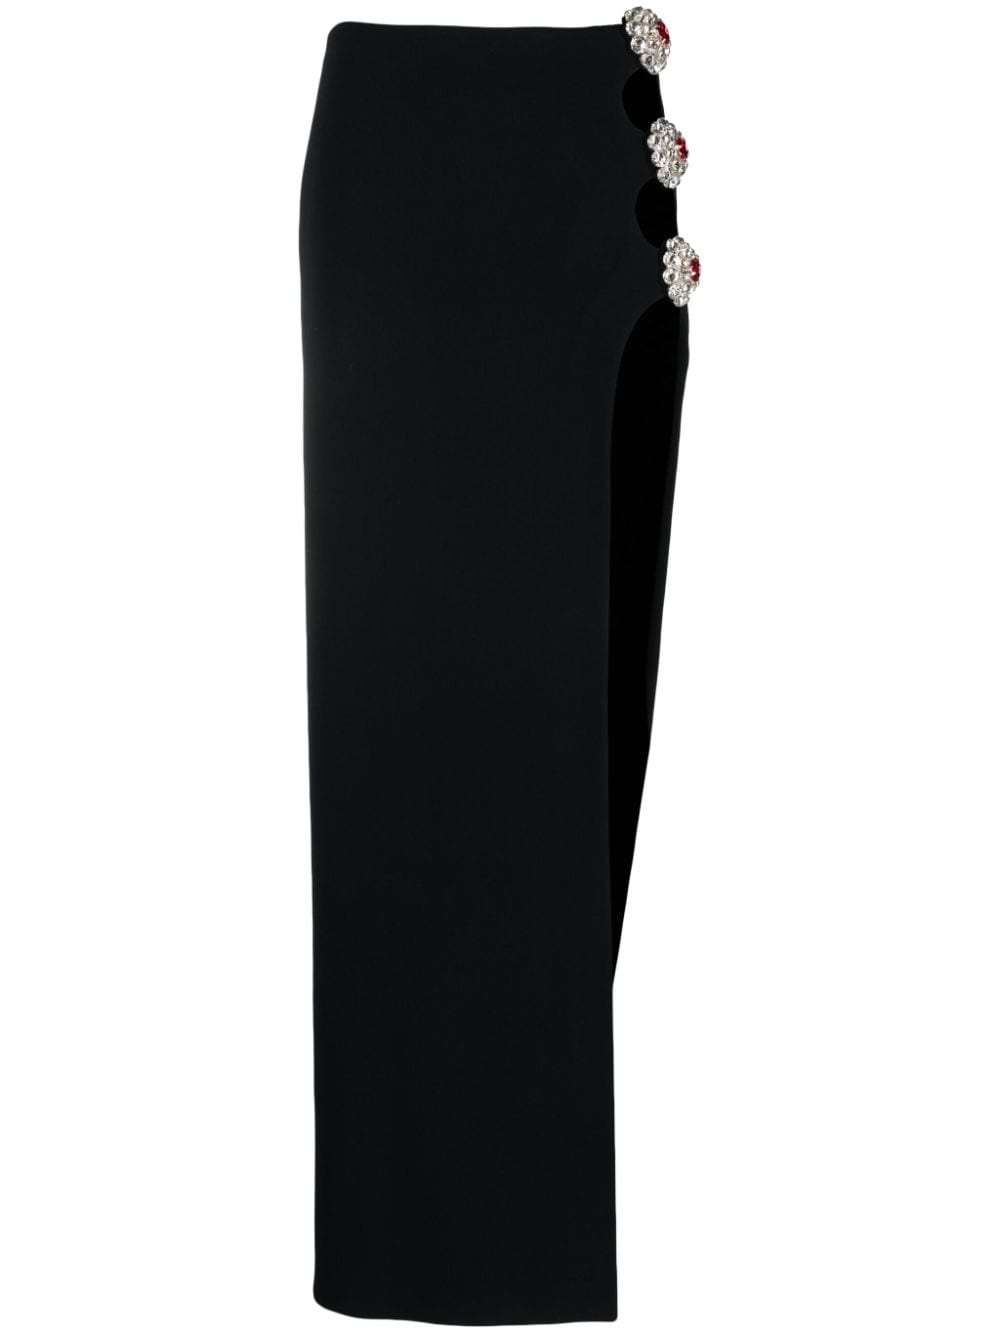 David Koma Cut-out Detail Crystal-embellished Skirt In Black